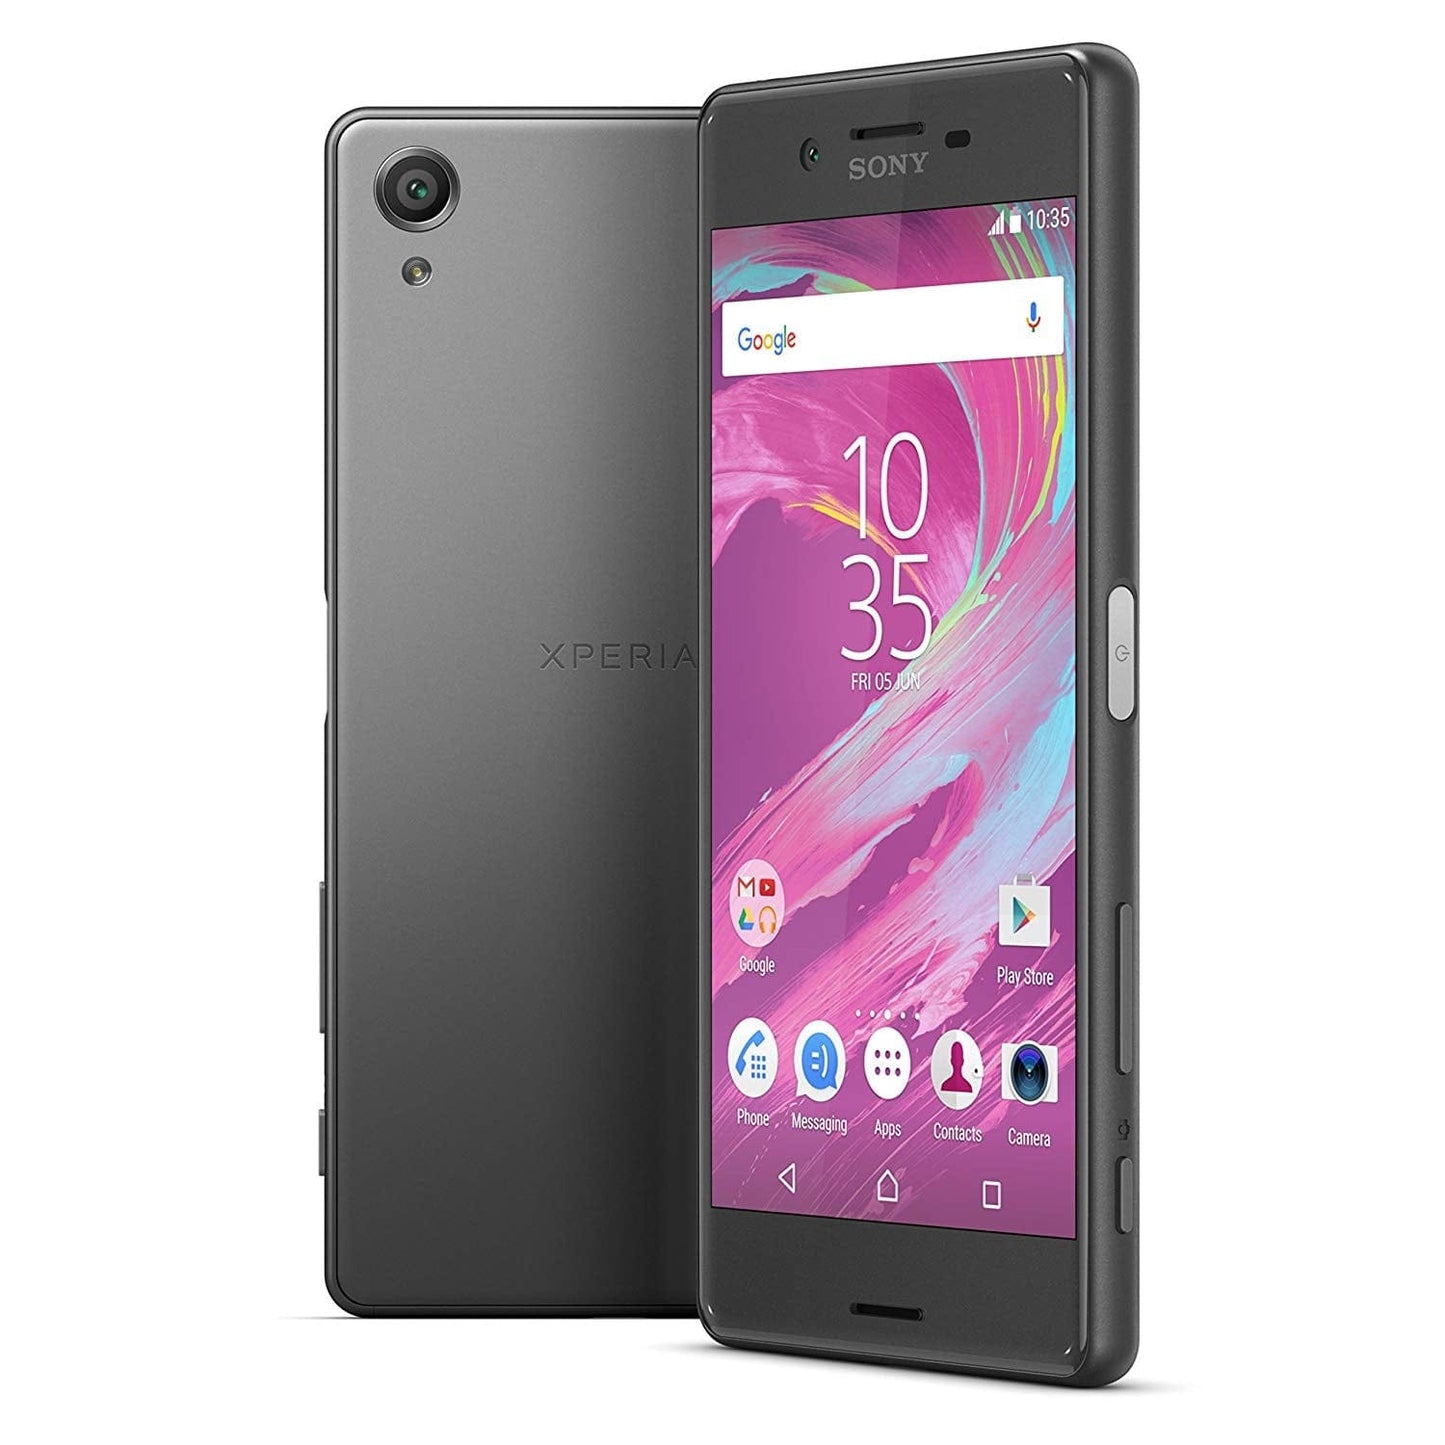 Sony Xperia X F5121 - 32 GB - Black-Gray - Unlocked - GSM